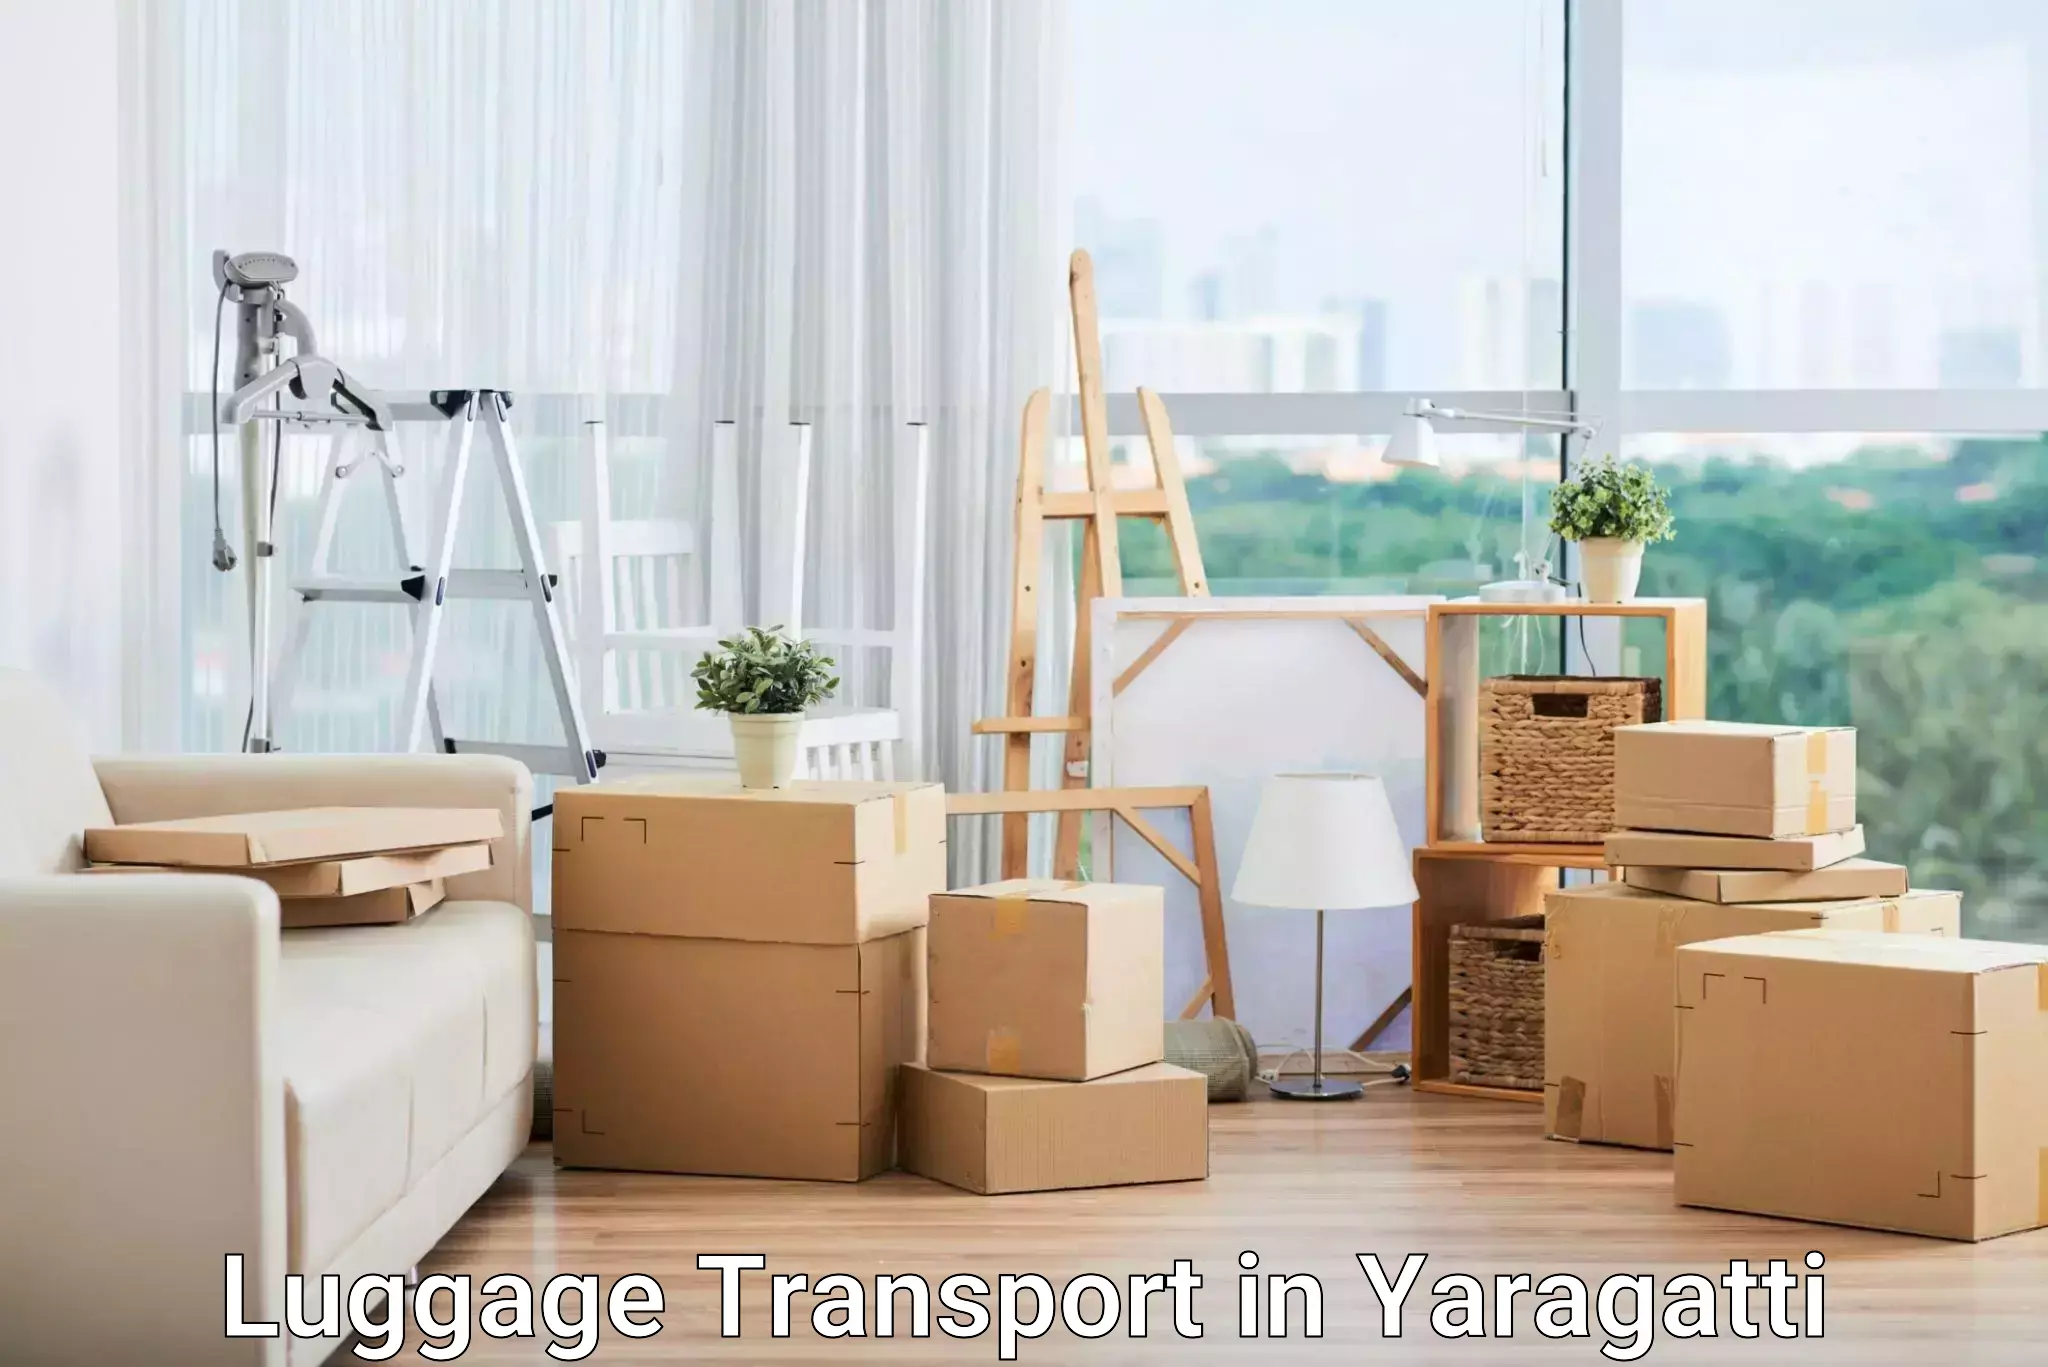 Business luggage transport in Yaragatti